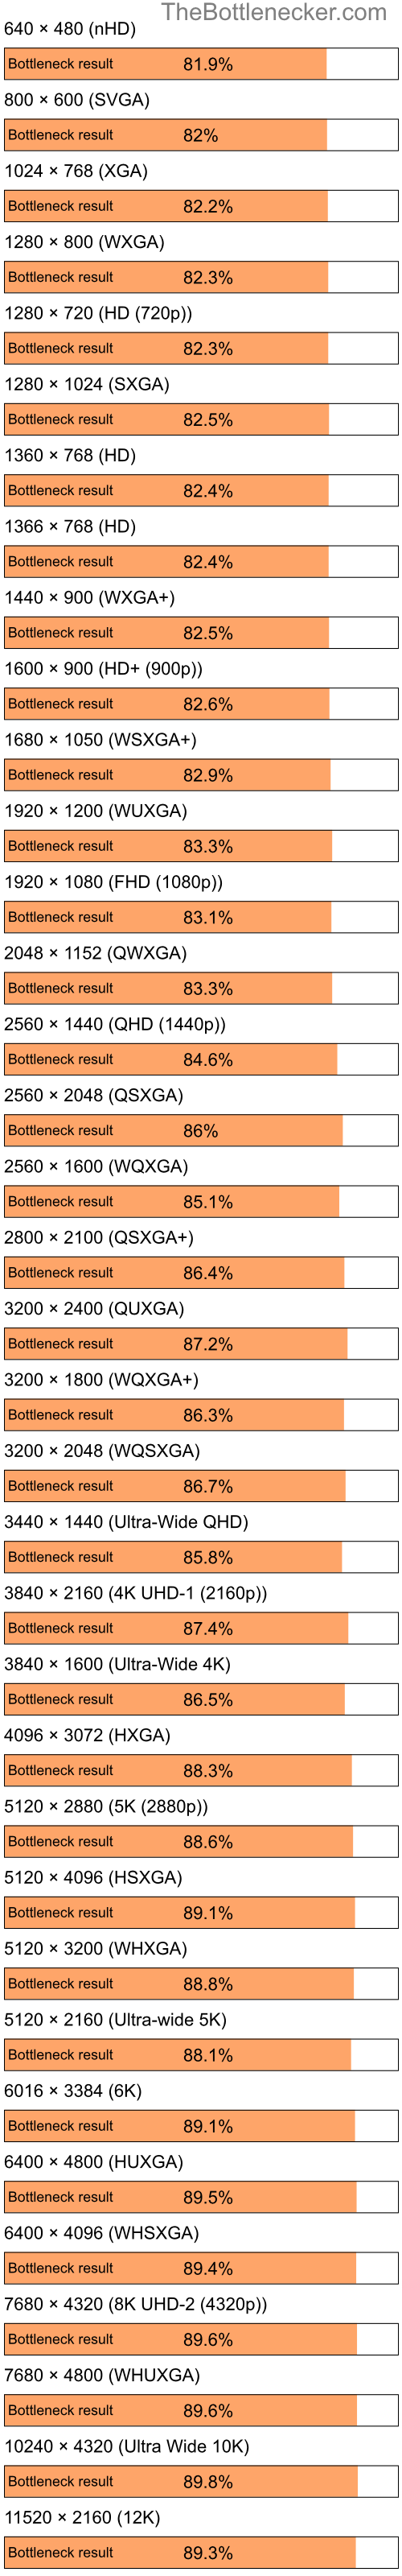 Bottleneck results by resolution for Intel Celeron and NVIDIA GeForce 6150SE nForce 430 in Graphic Card Intense Tasks